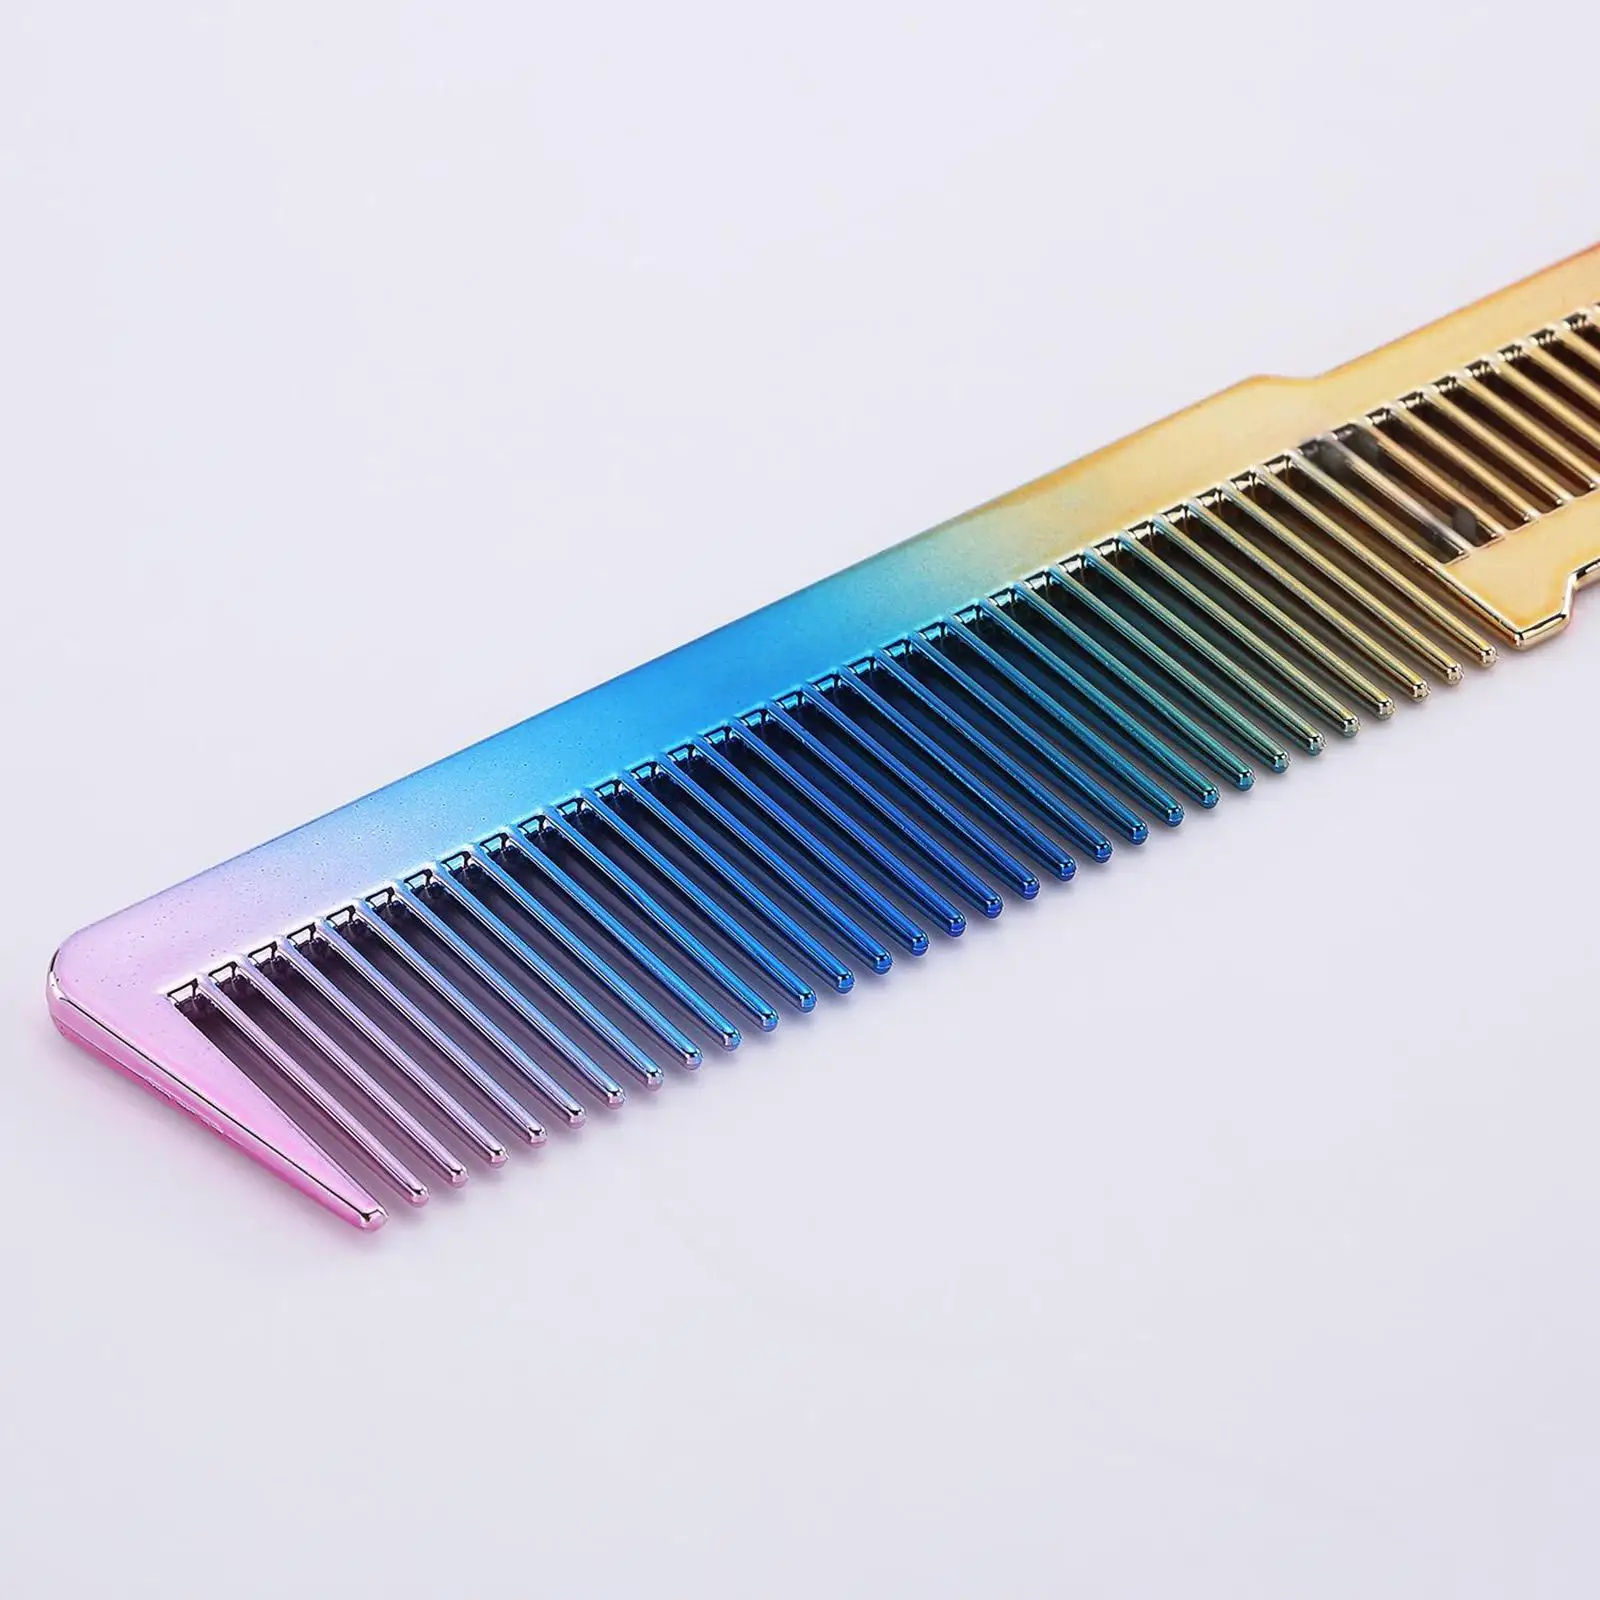 2X Hair Cutting Comb Barbers Salon Hair Hairdressing Combs Flat Top Comb